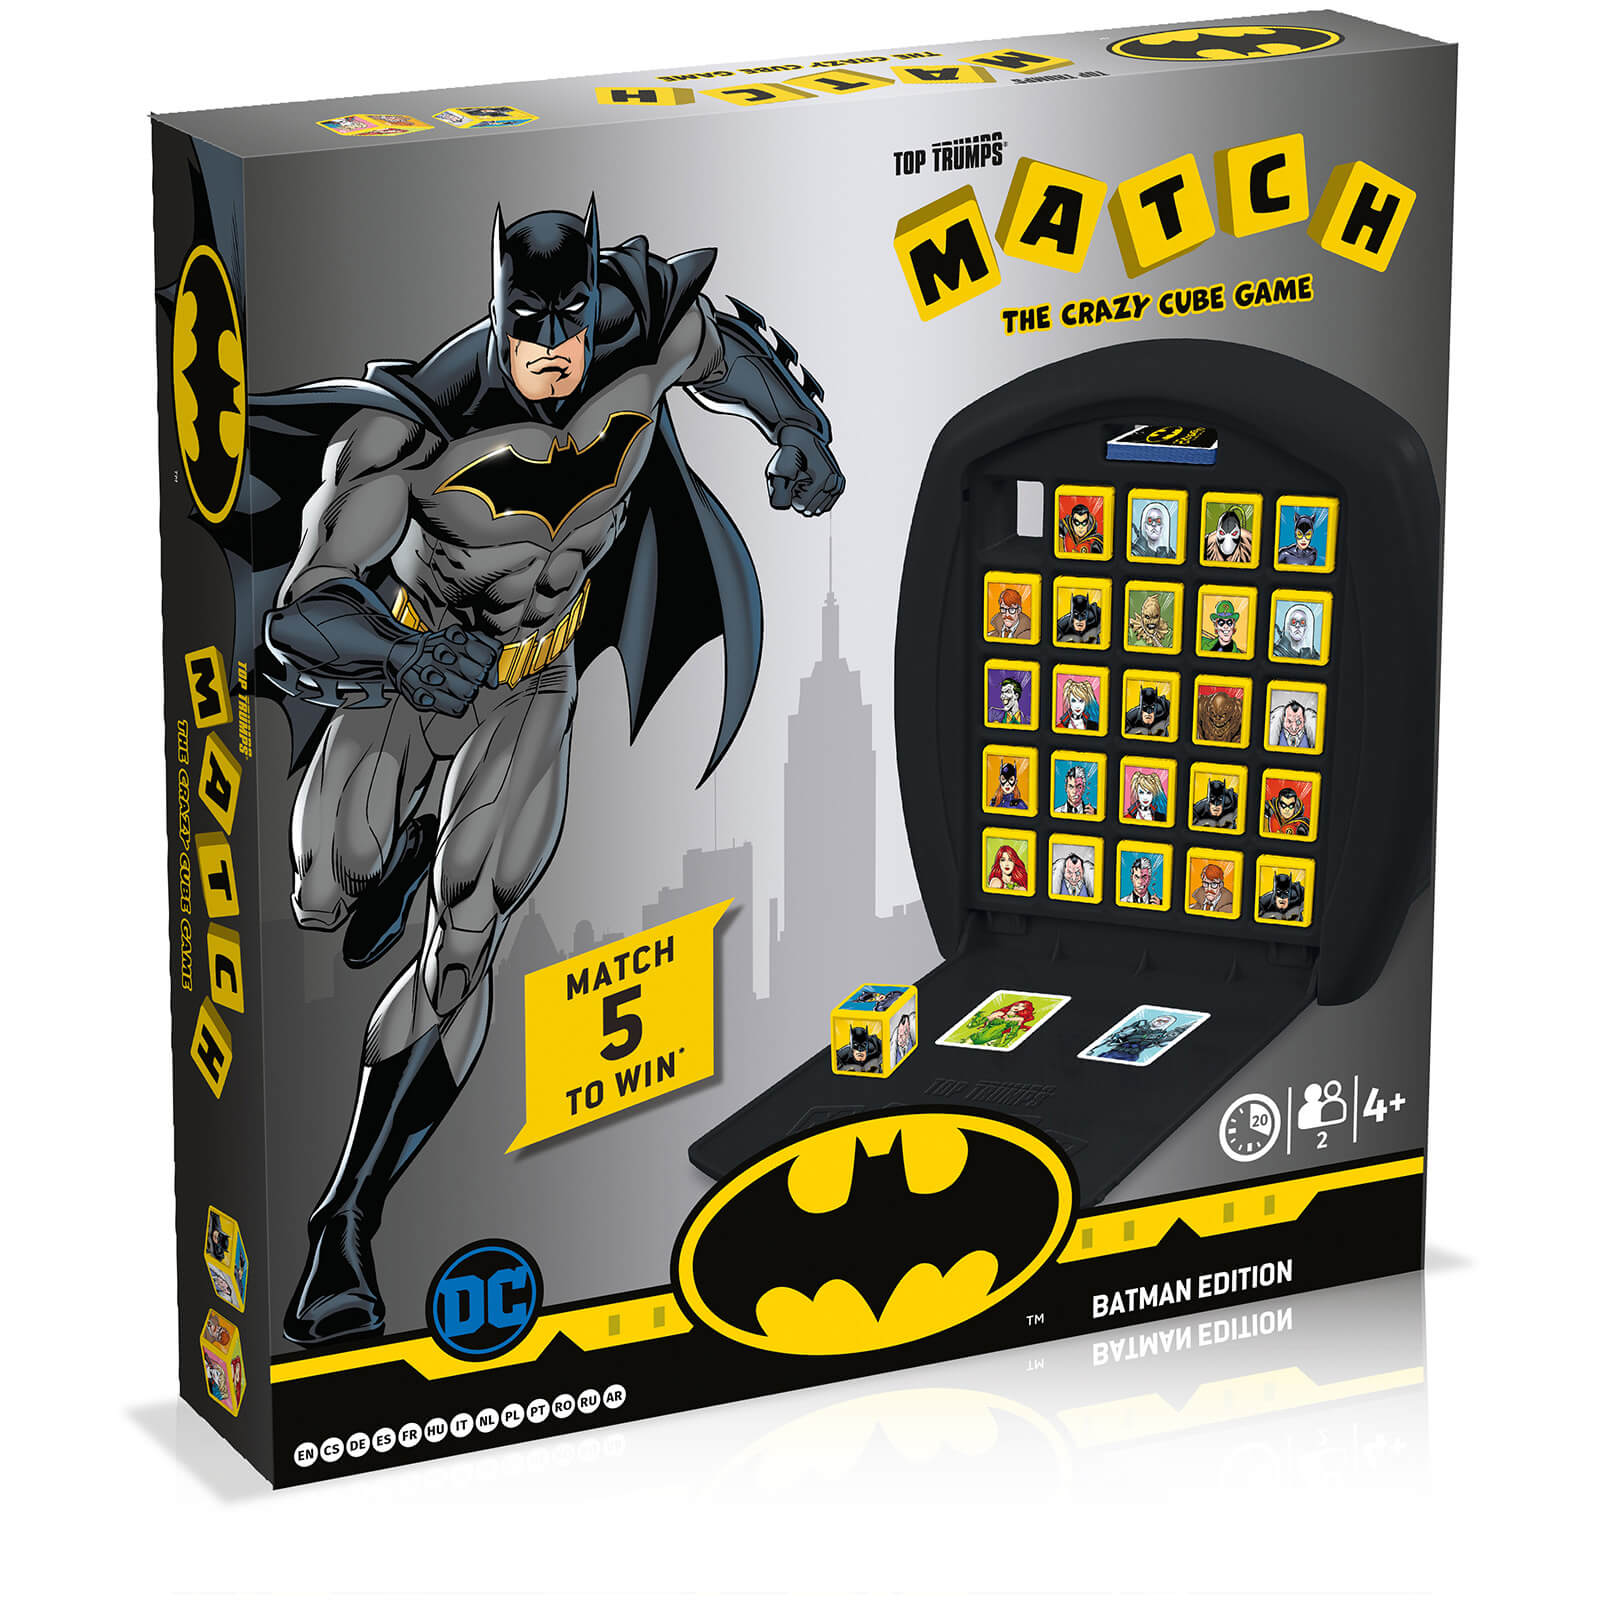 Image of Top Trumps Match Board Game - Batman Edition